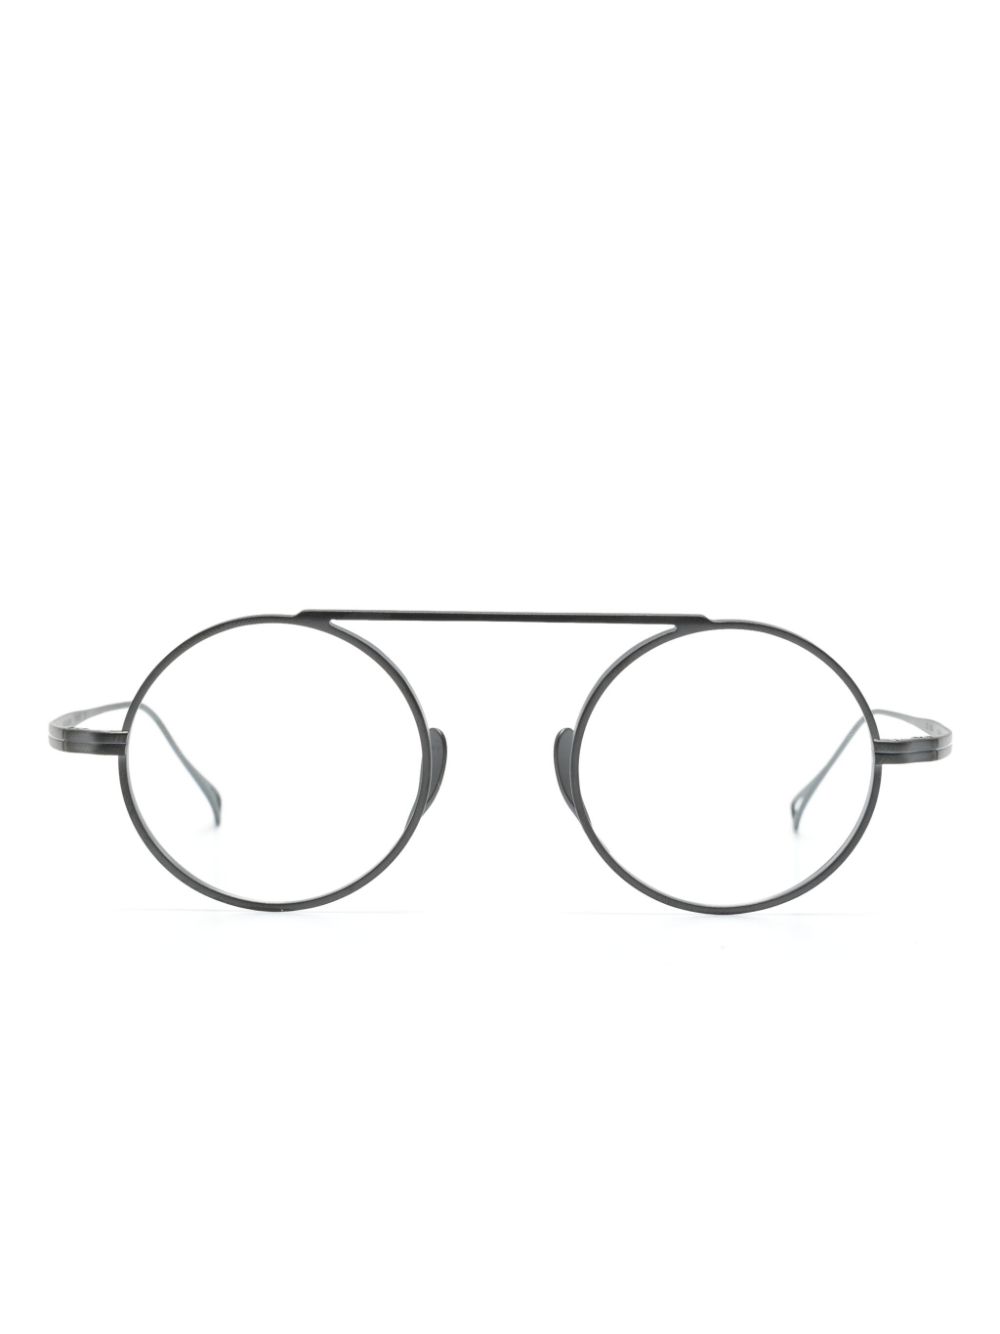 Kame Mannen 9500 Round-frame Glasses In Metallic